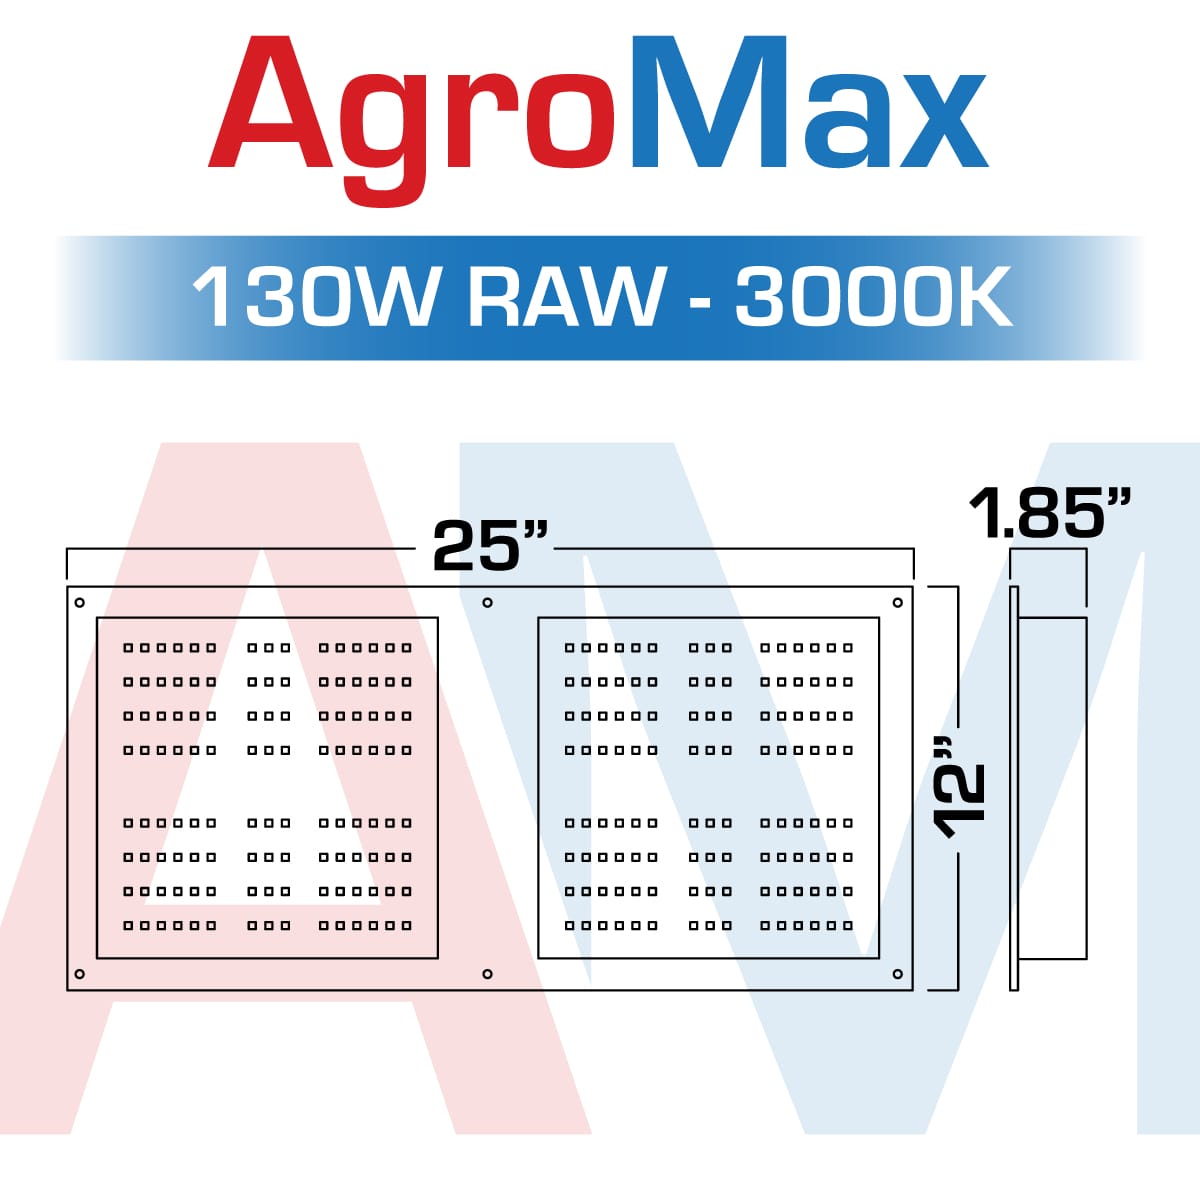 Agromax Raw 130 Full Spectrum Led 3K Fixture Specs